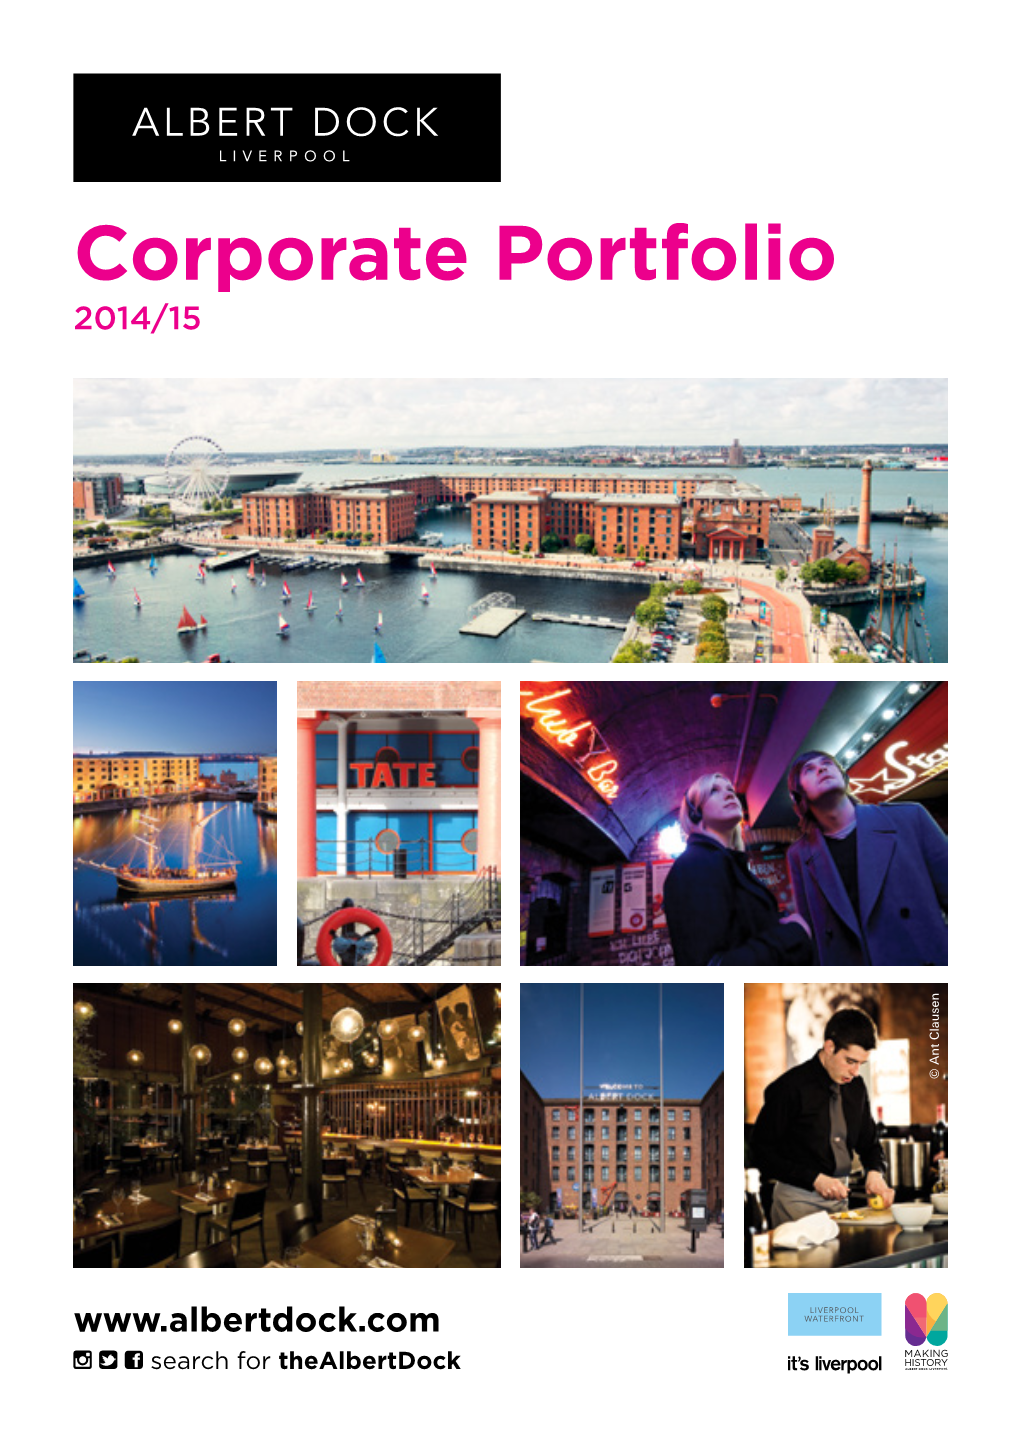 Albert Dock Corporate Portfolio.Pdf